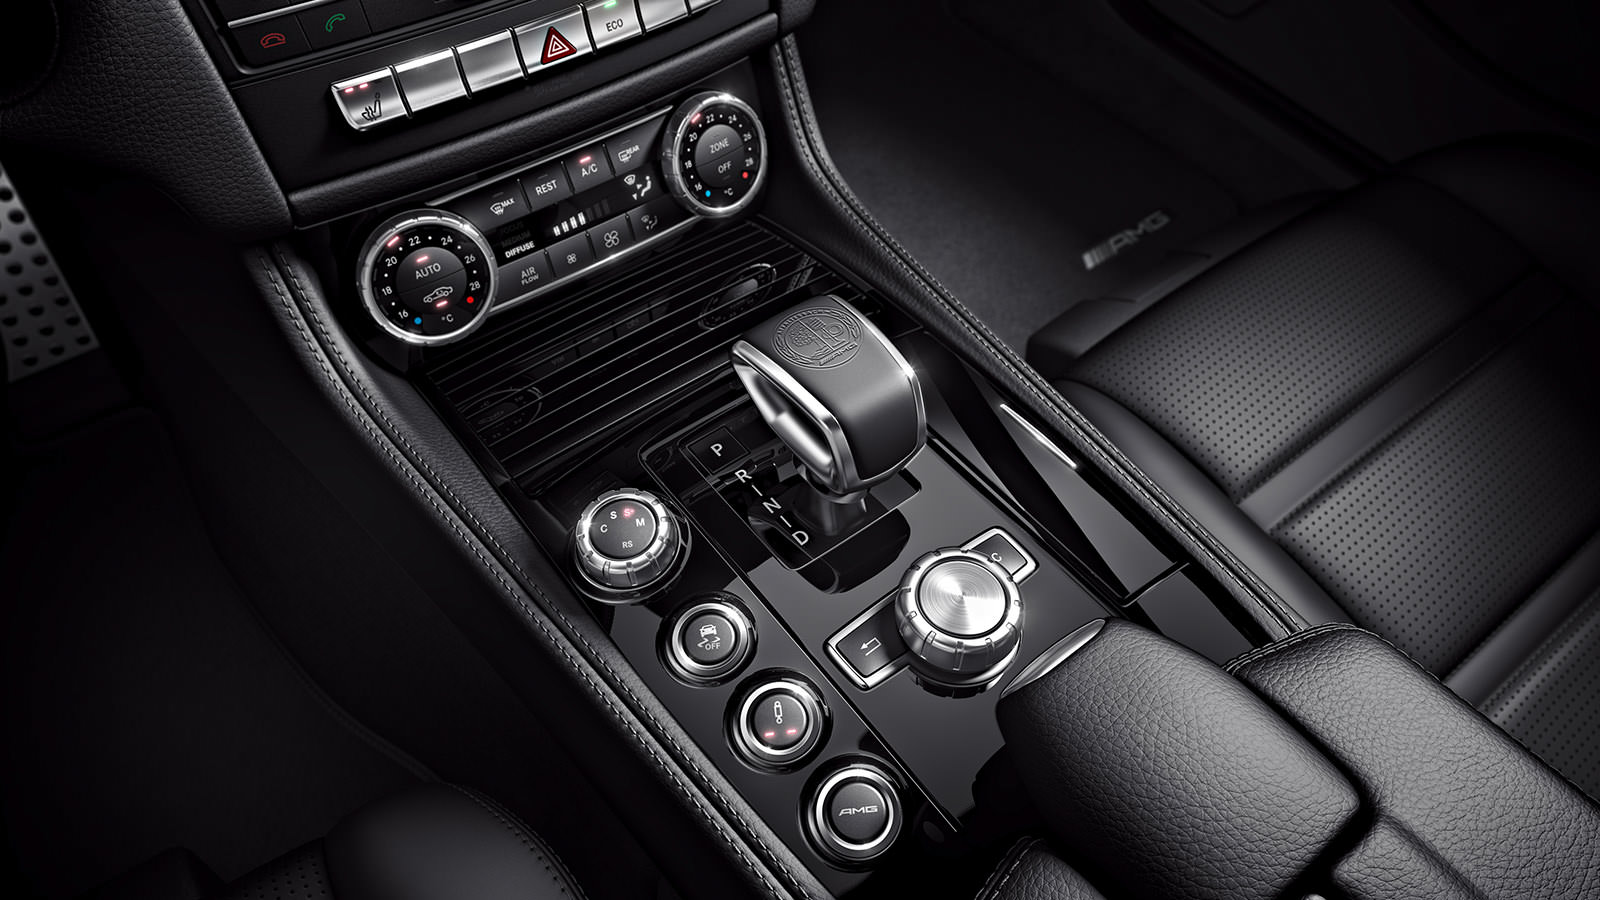 Mercedes Benz AMG CLS 63 interior gear view